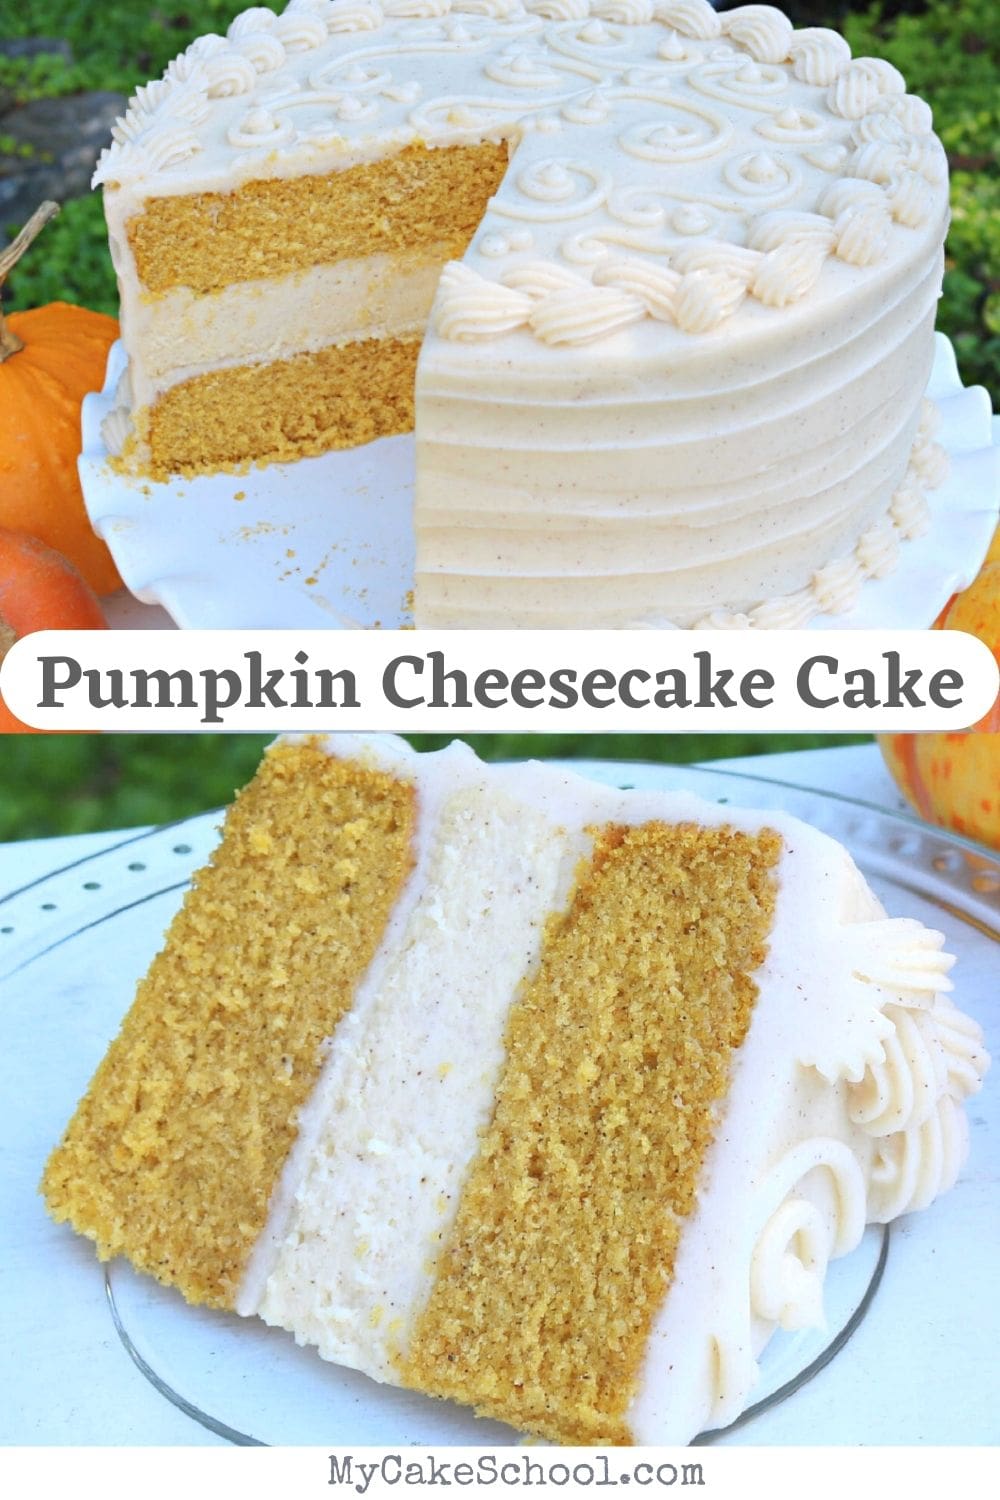 Pumpkin Cheesecake Cake- So moist and delicious!